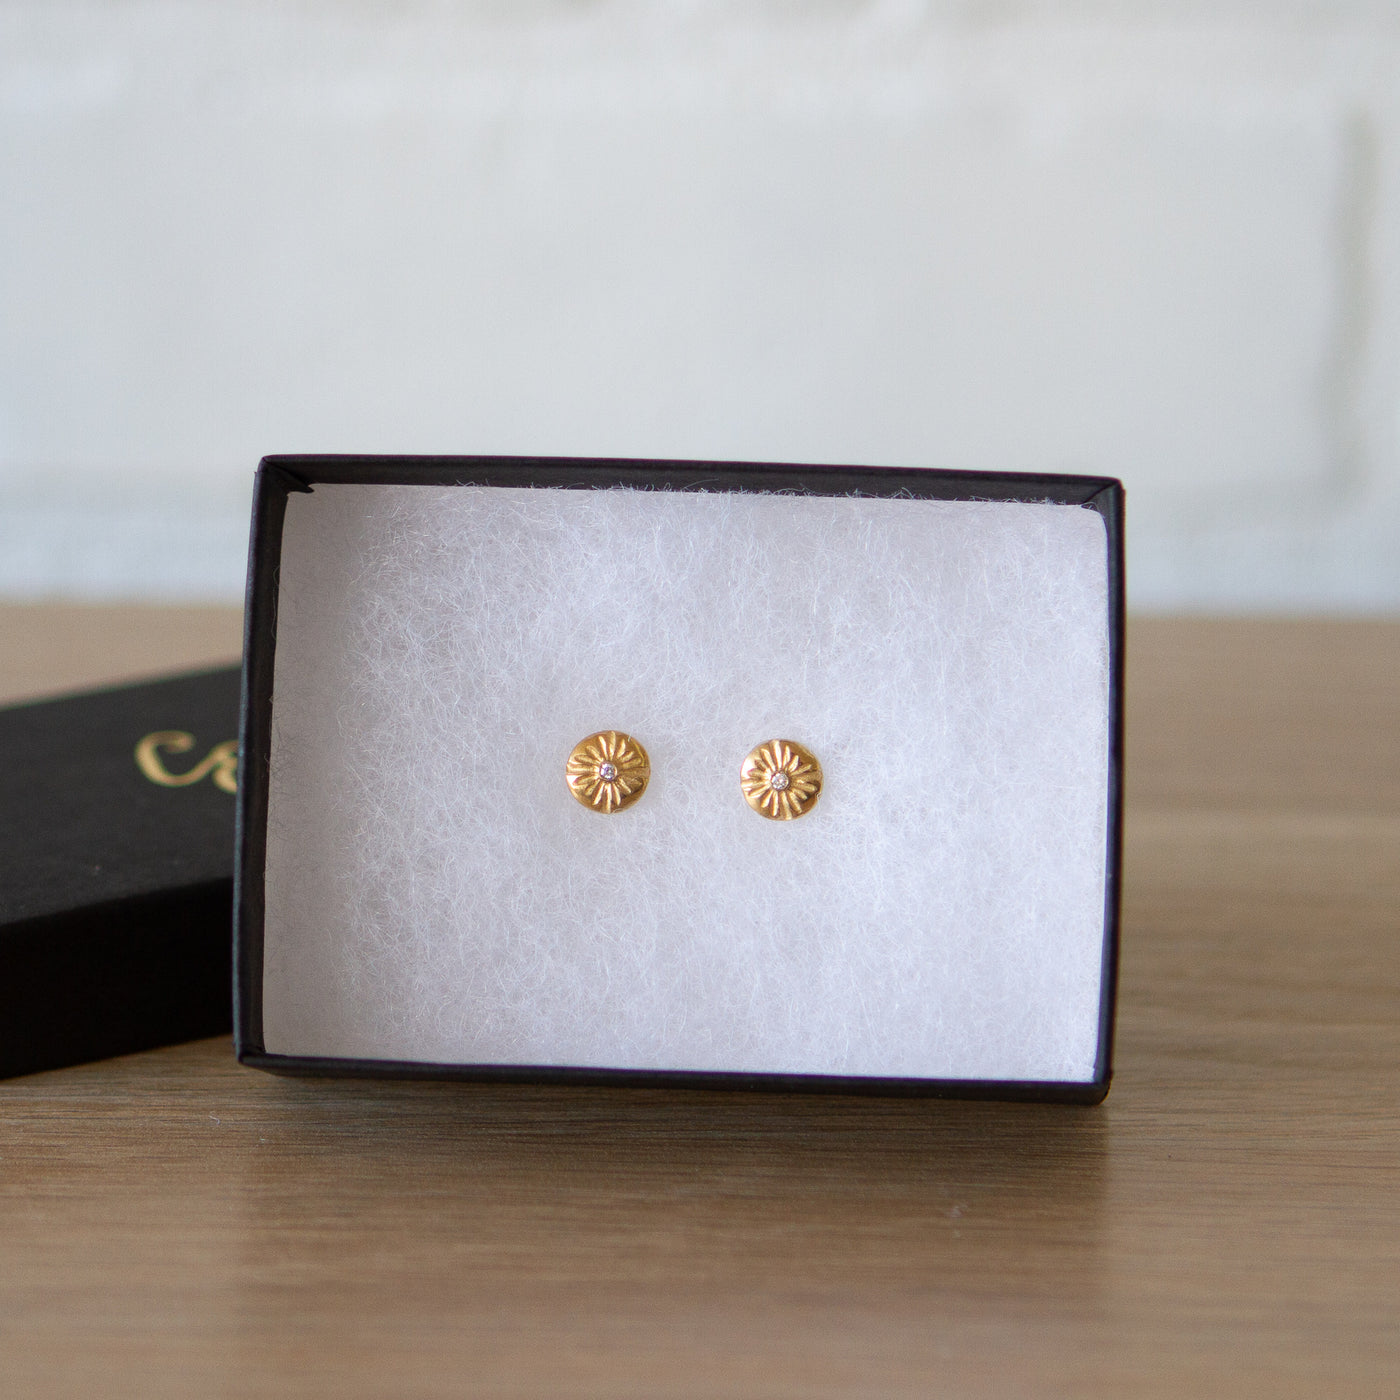 Small Lucia Diamond Vermeil Stud Earrings in a gift box by Corey Egan